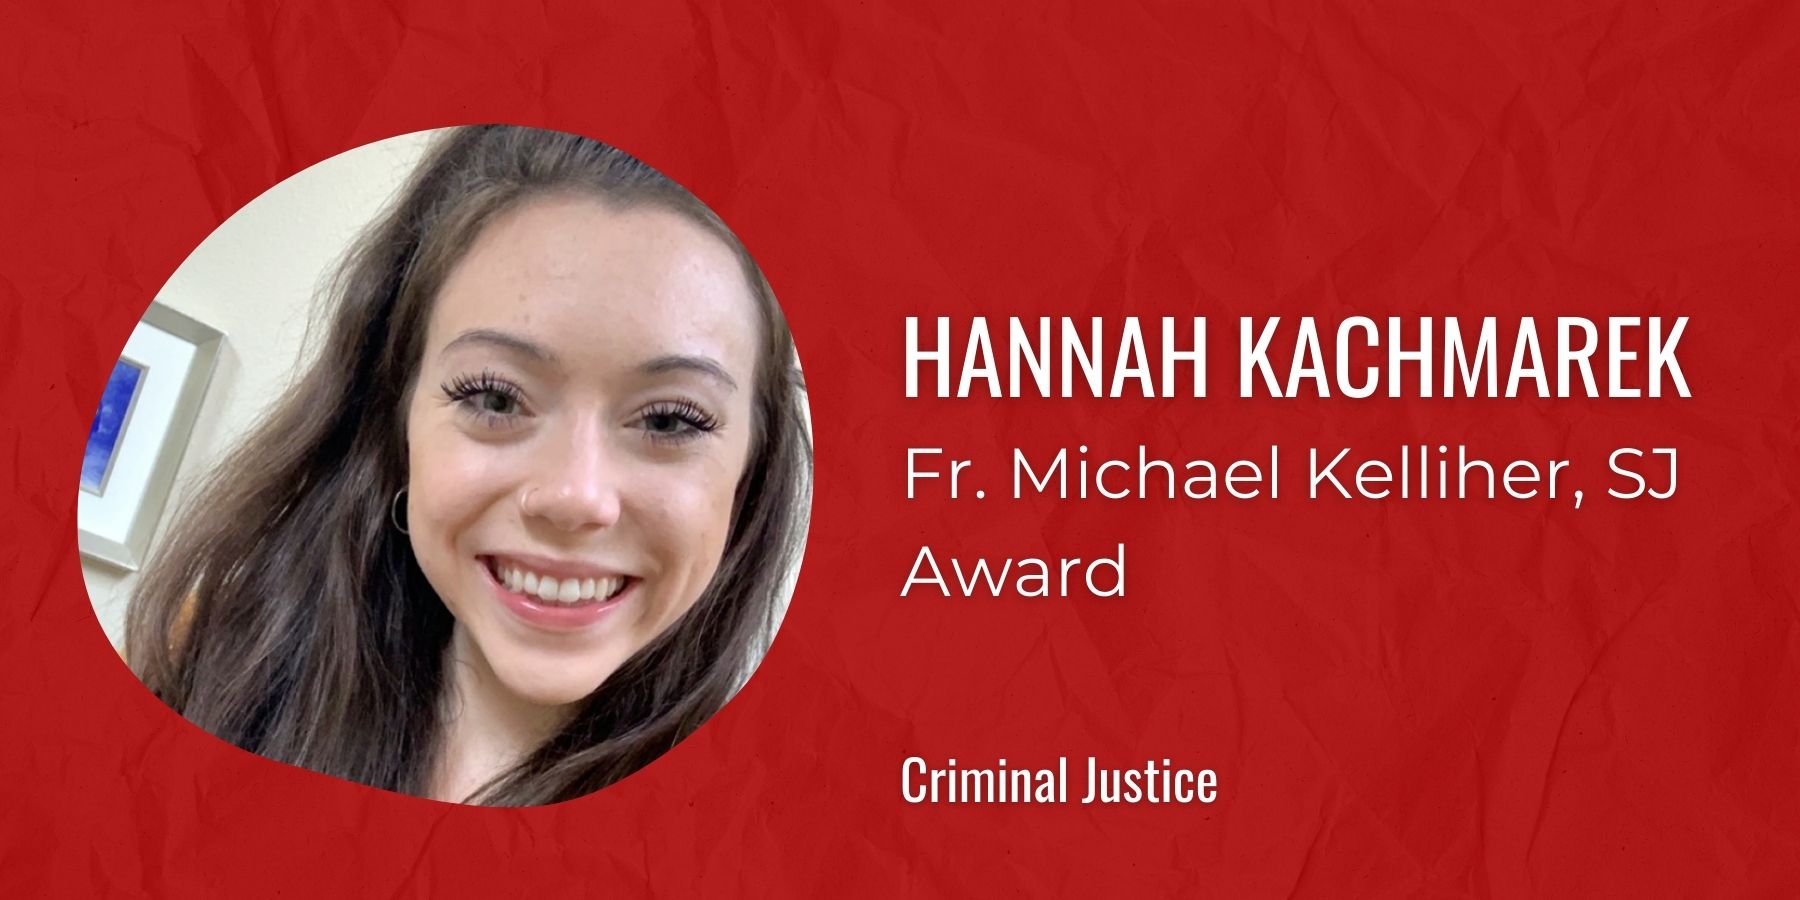 Image of Hannah Kachmarek with text: Fr. Michael Kelliher, SJ Award, Criminal Justice
